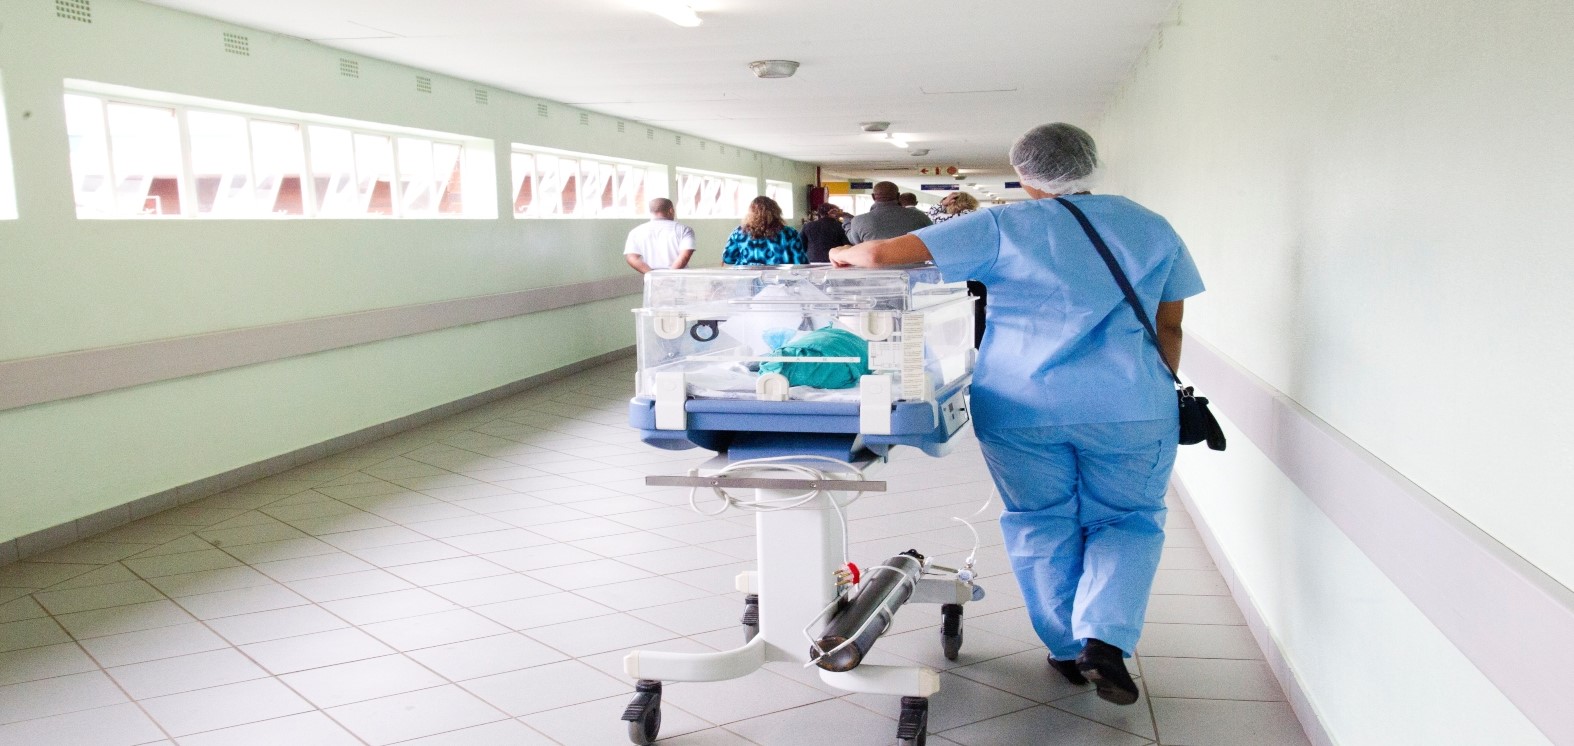 Nurse walking alongside ventilator in hospital corridor 